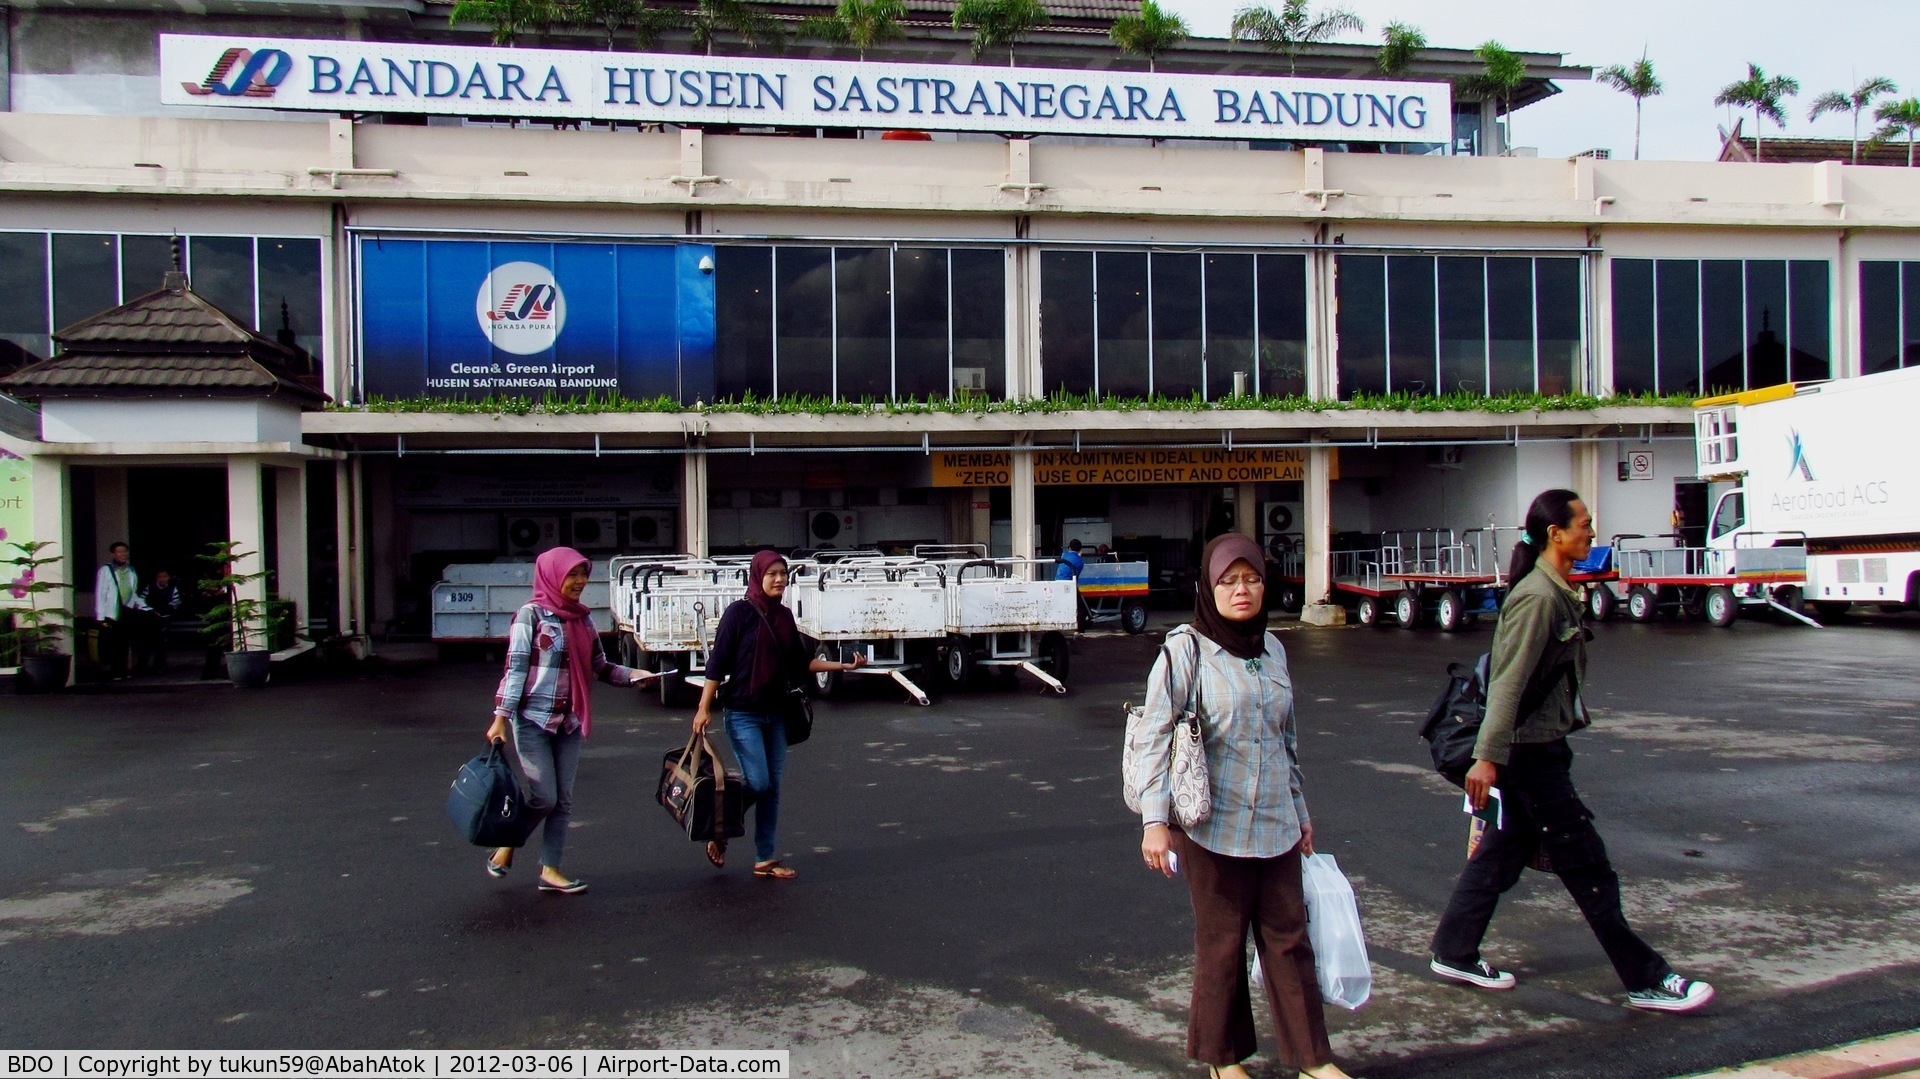 Husein Sastranegara Airport, Bandung, West Java Indonesia (BDO) - Husein Sastranegara International Airport (Indonesian: Bandar Udara Internasional Husein Sastranegara) (IATA: BDO, ICAO: WICC) 